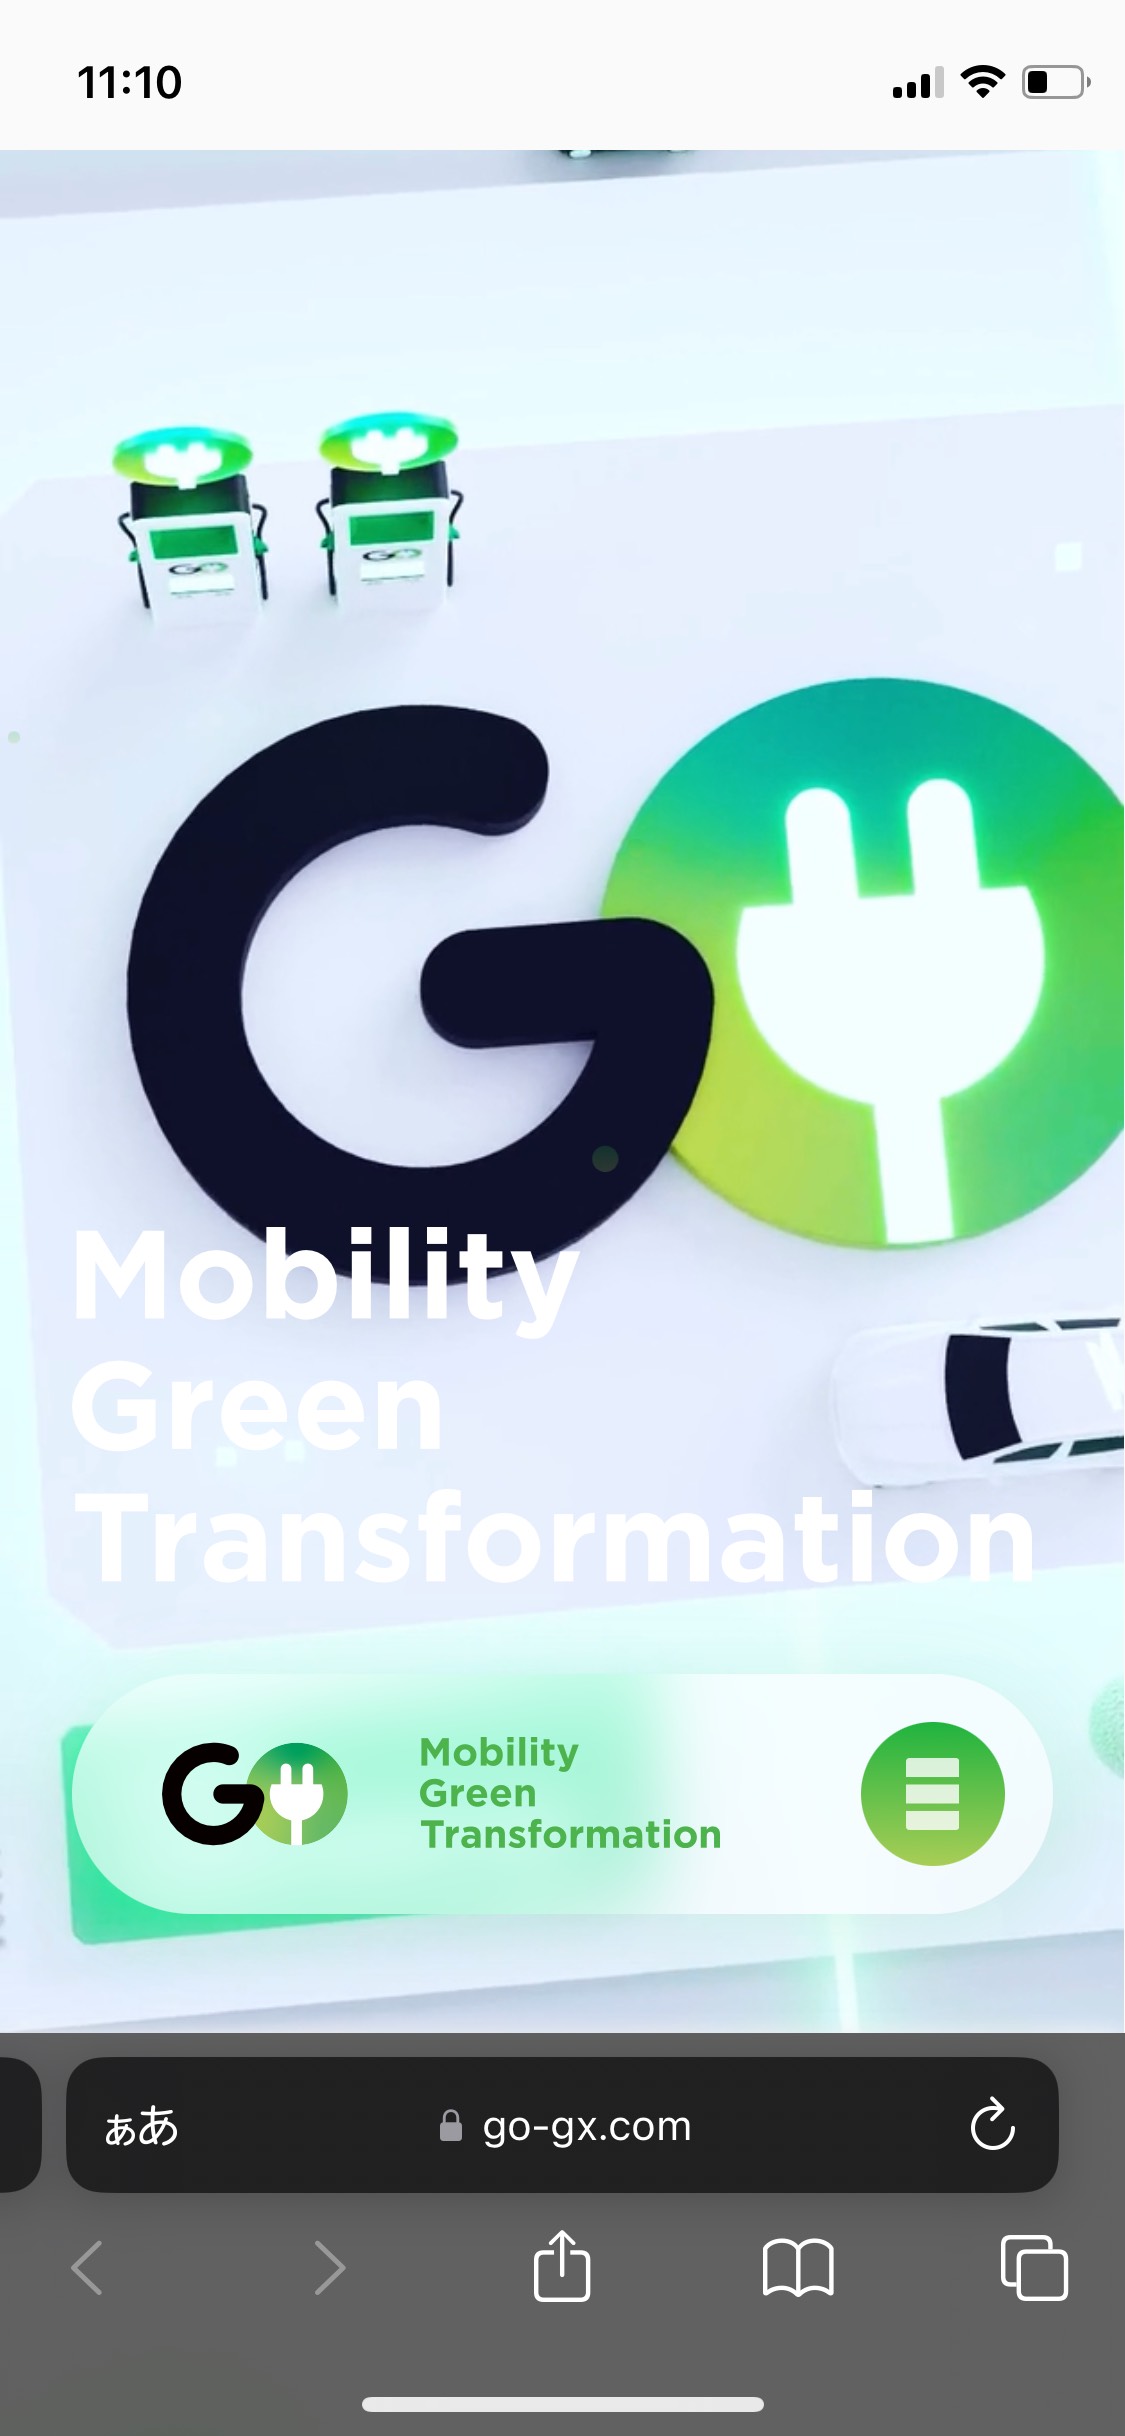 GO株式会社の脱炭素サービスGX | 脱炭素化に向けたEV関連サービスのサイト